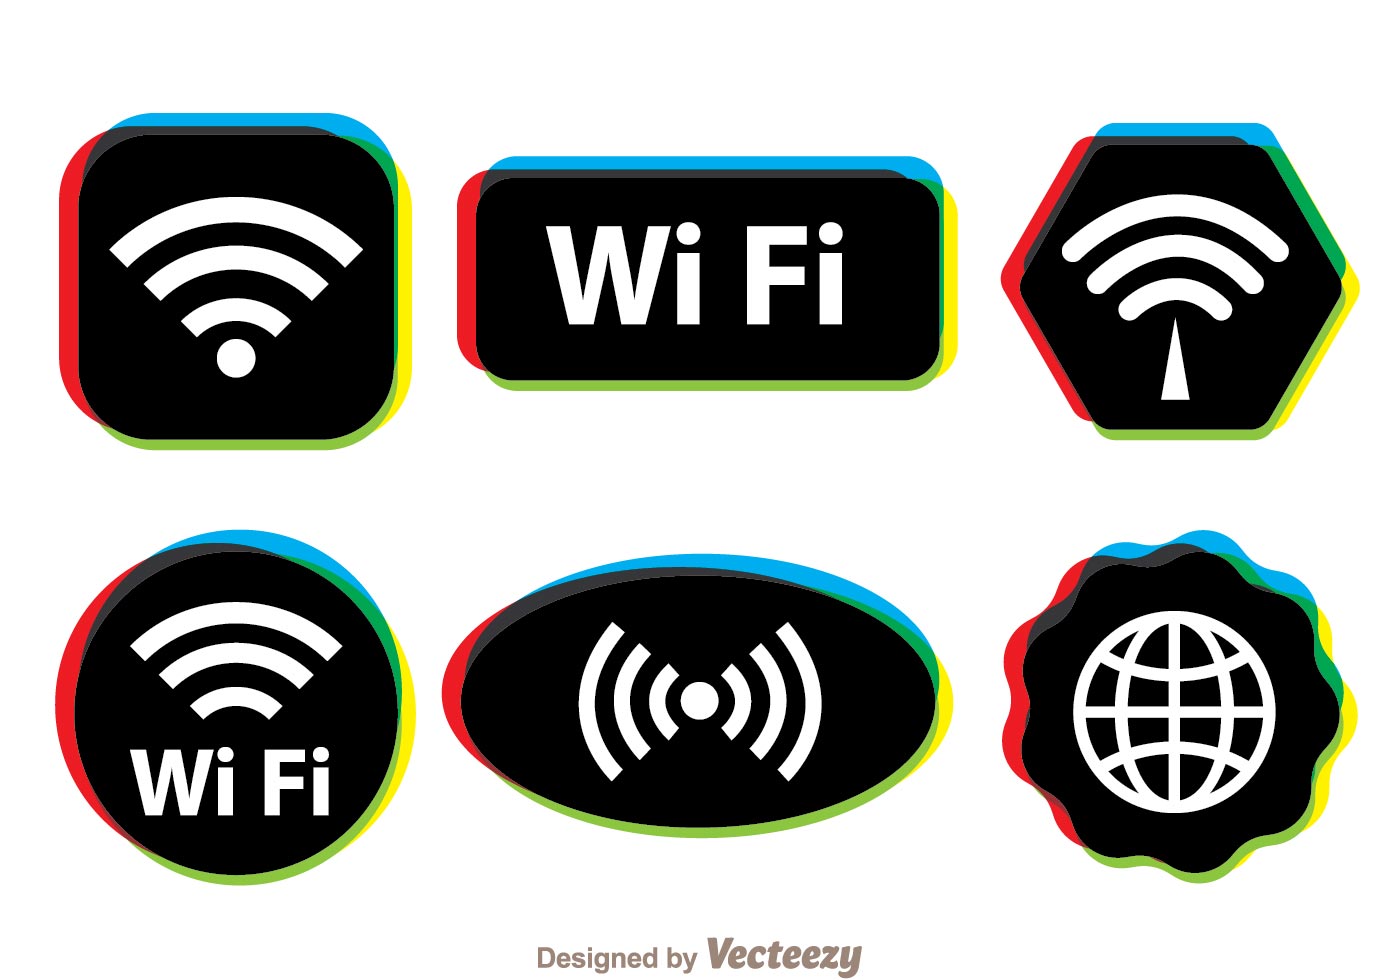 Wifi Symbol Free Vector Art - (13446 Free Downloads)